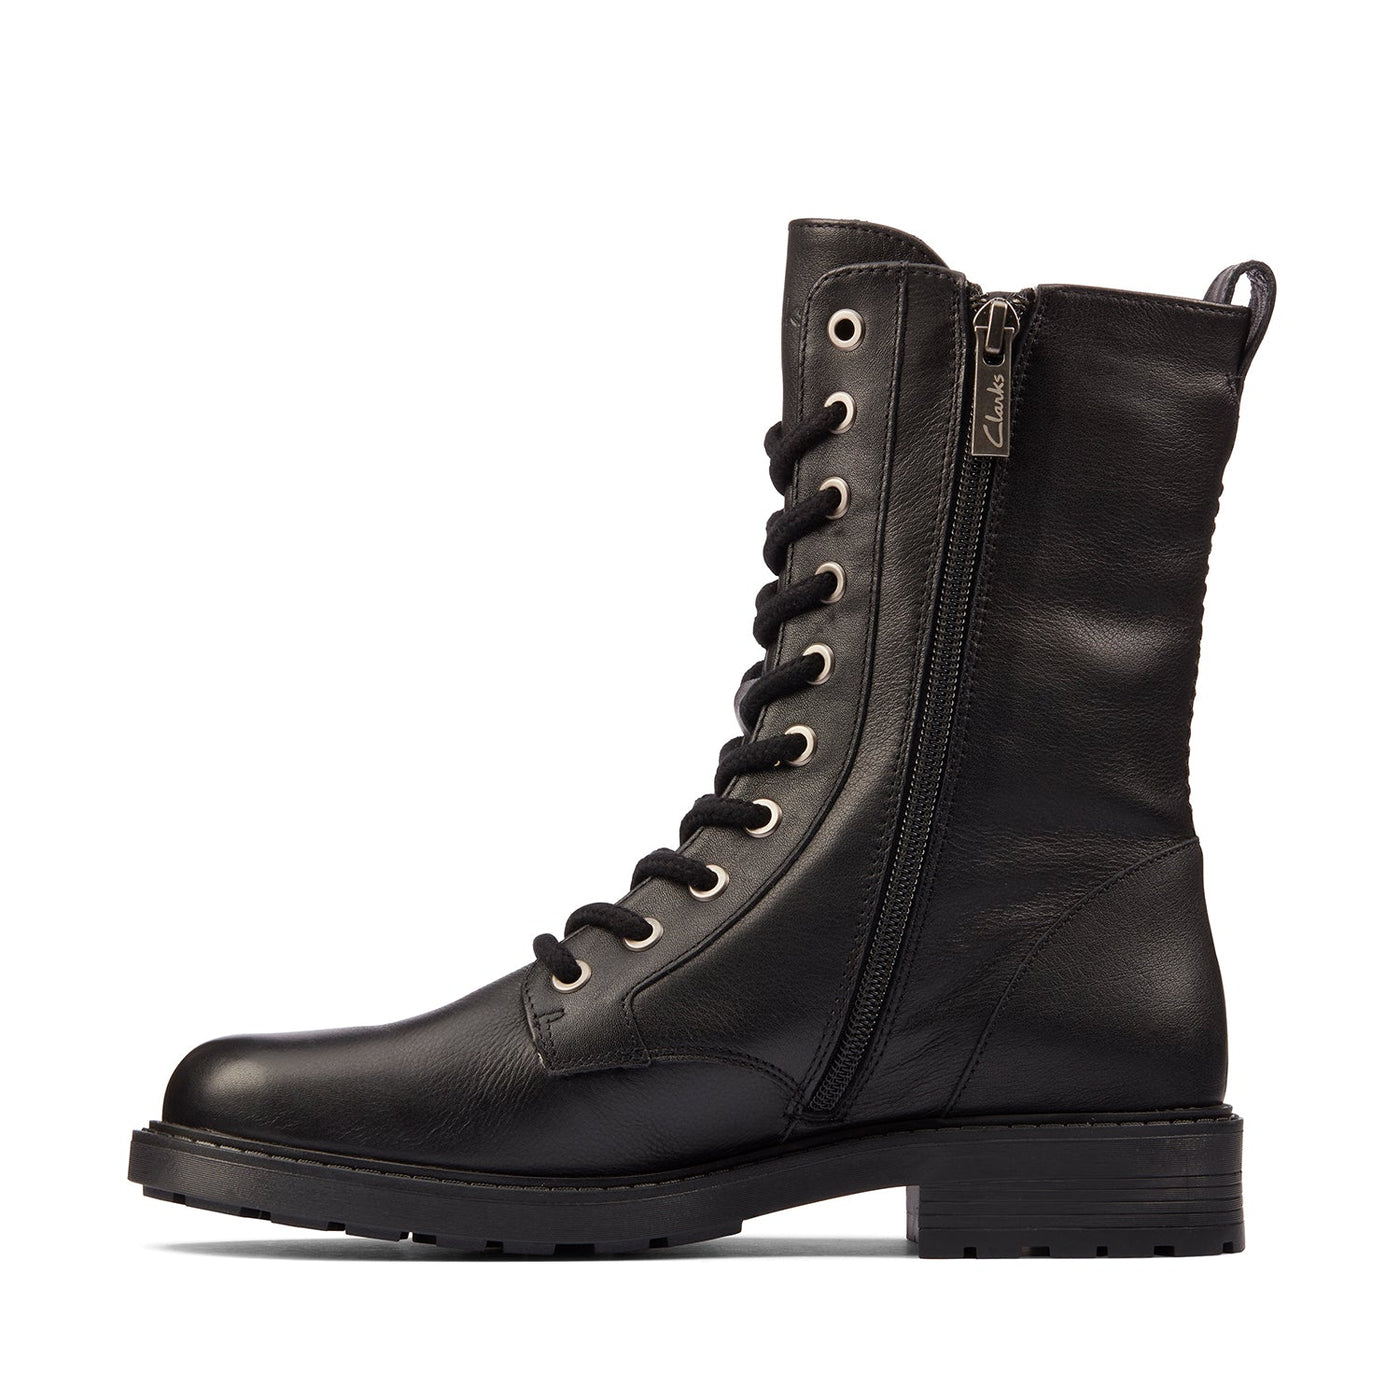 Orinoco2 Style Black Leather